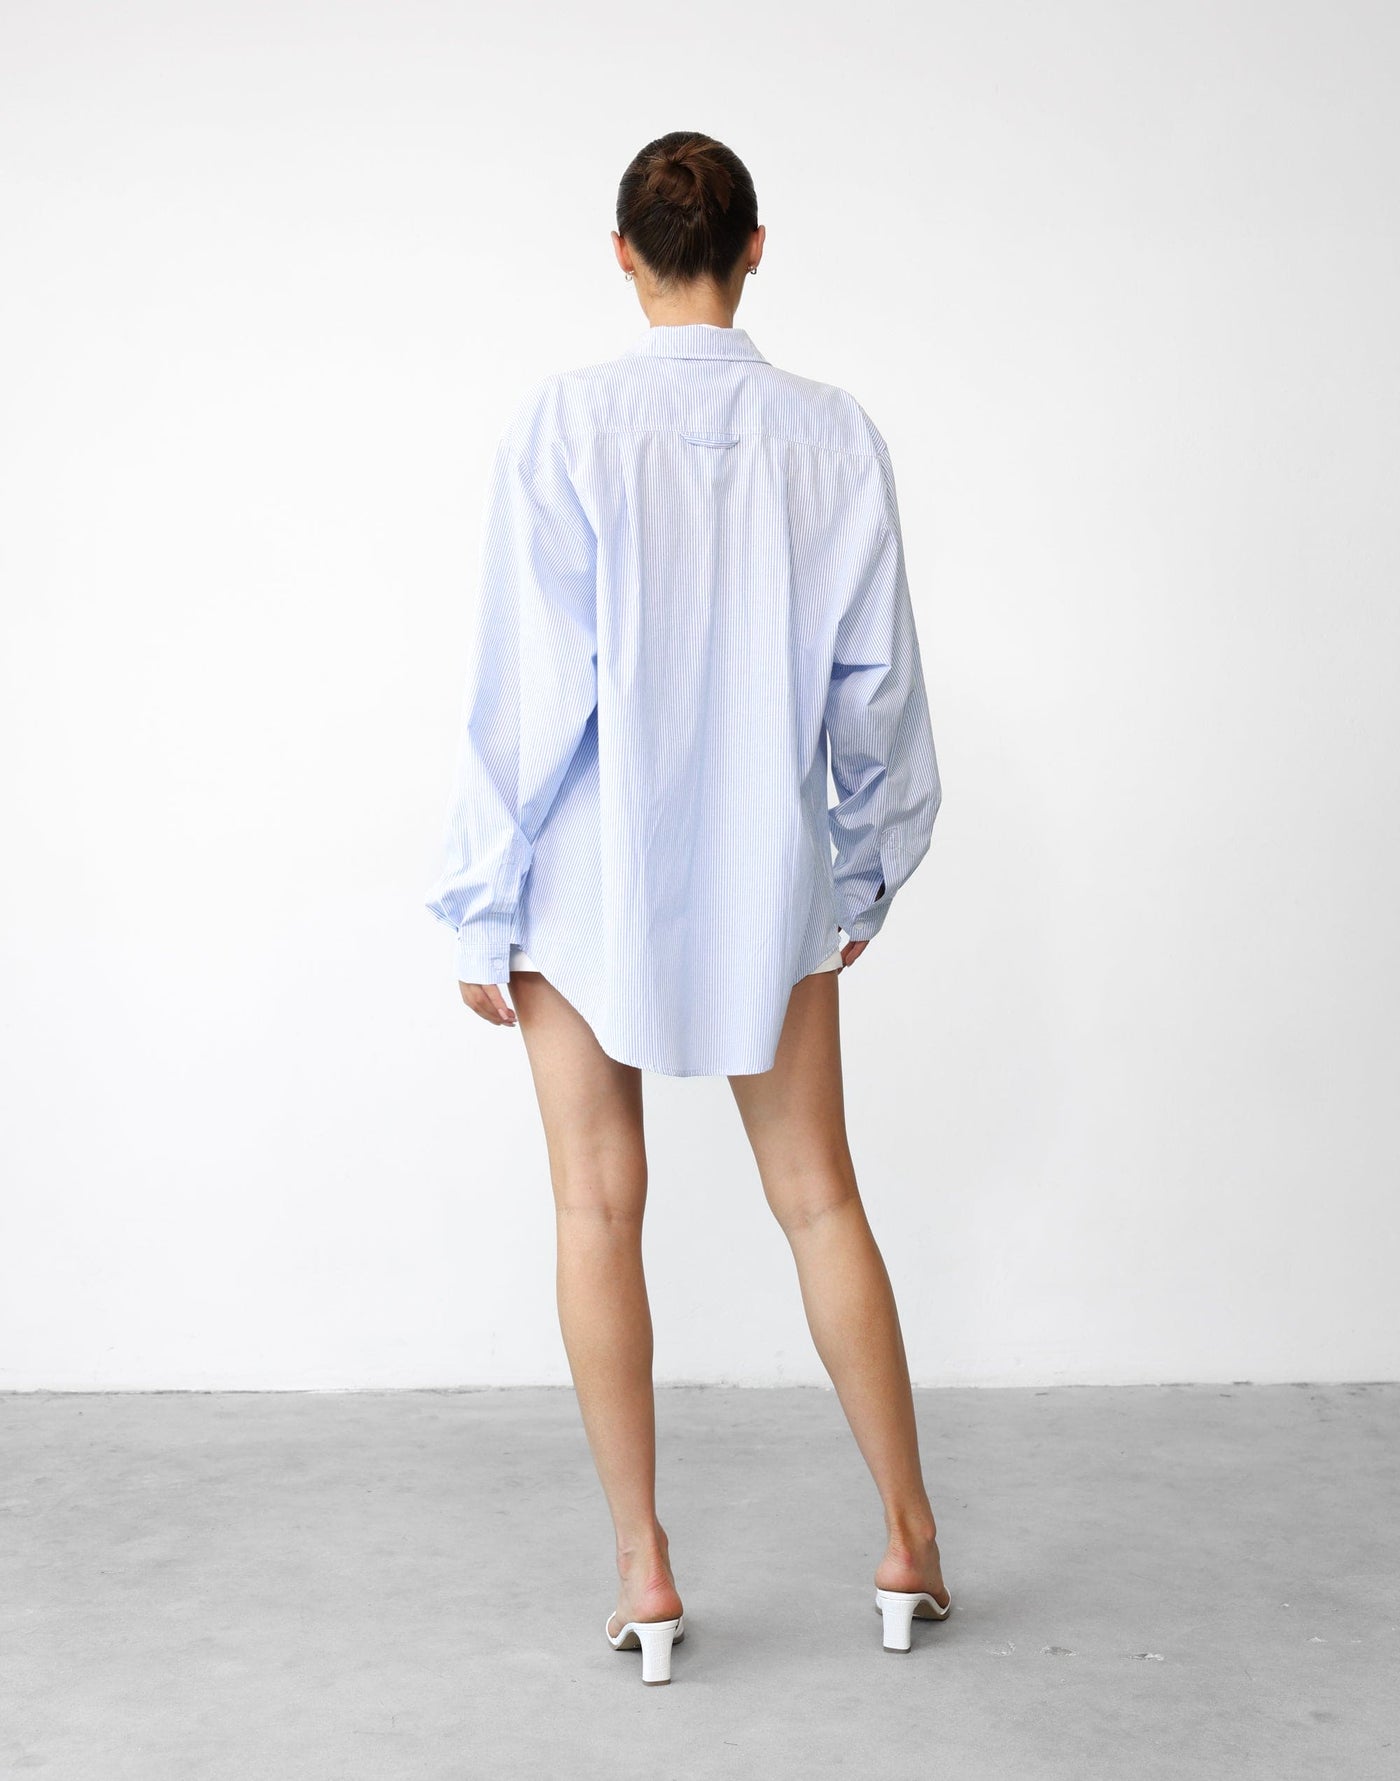 Franco Shirt (Blue/White Stripe) - Oversized Button-up Shirt - Women's Top - Charcoal Clothing